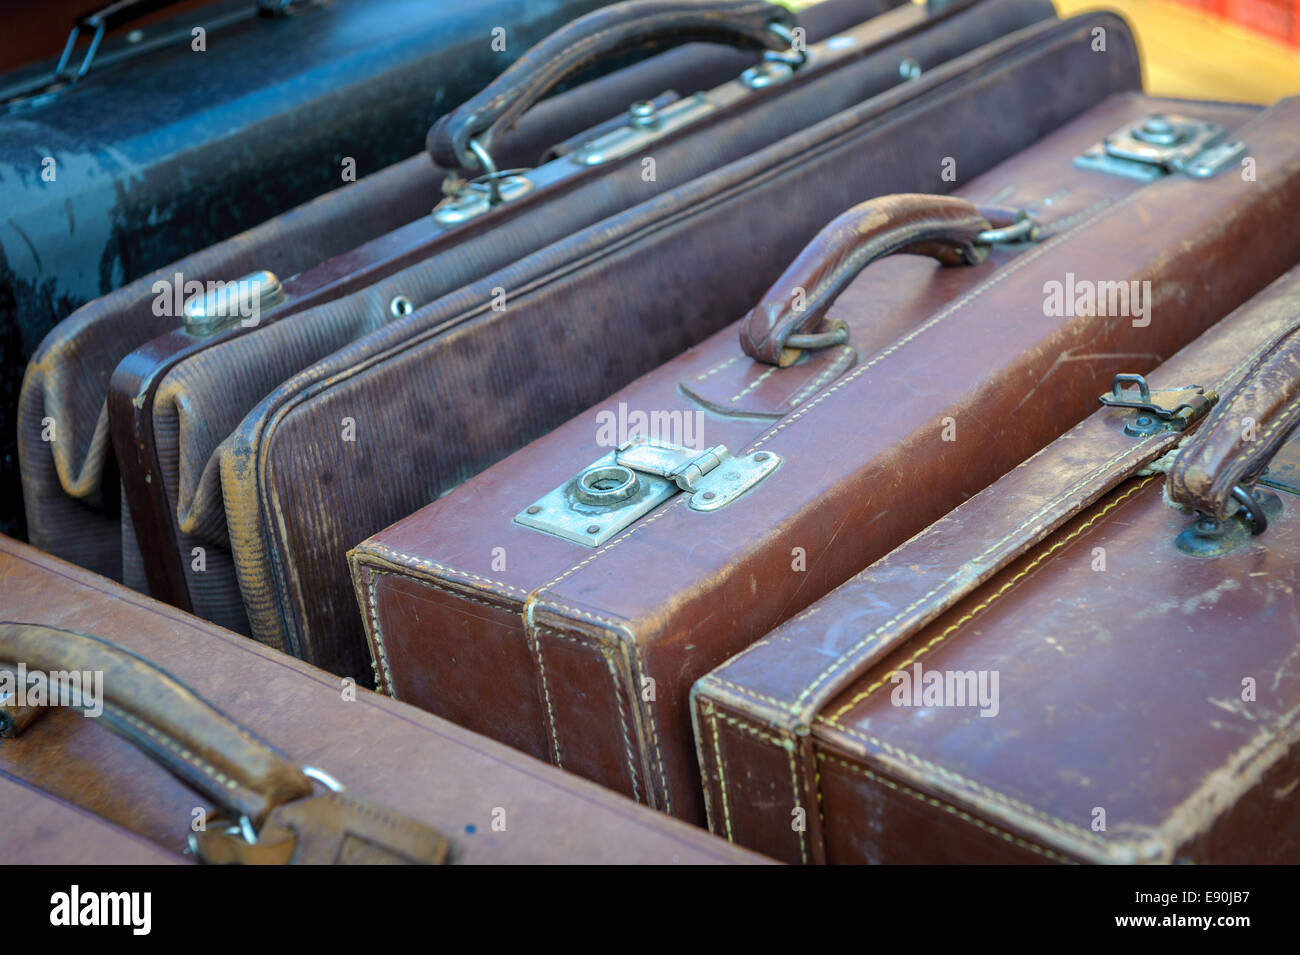 Vintage suitcases Stock Photo